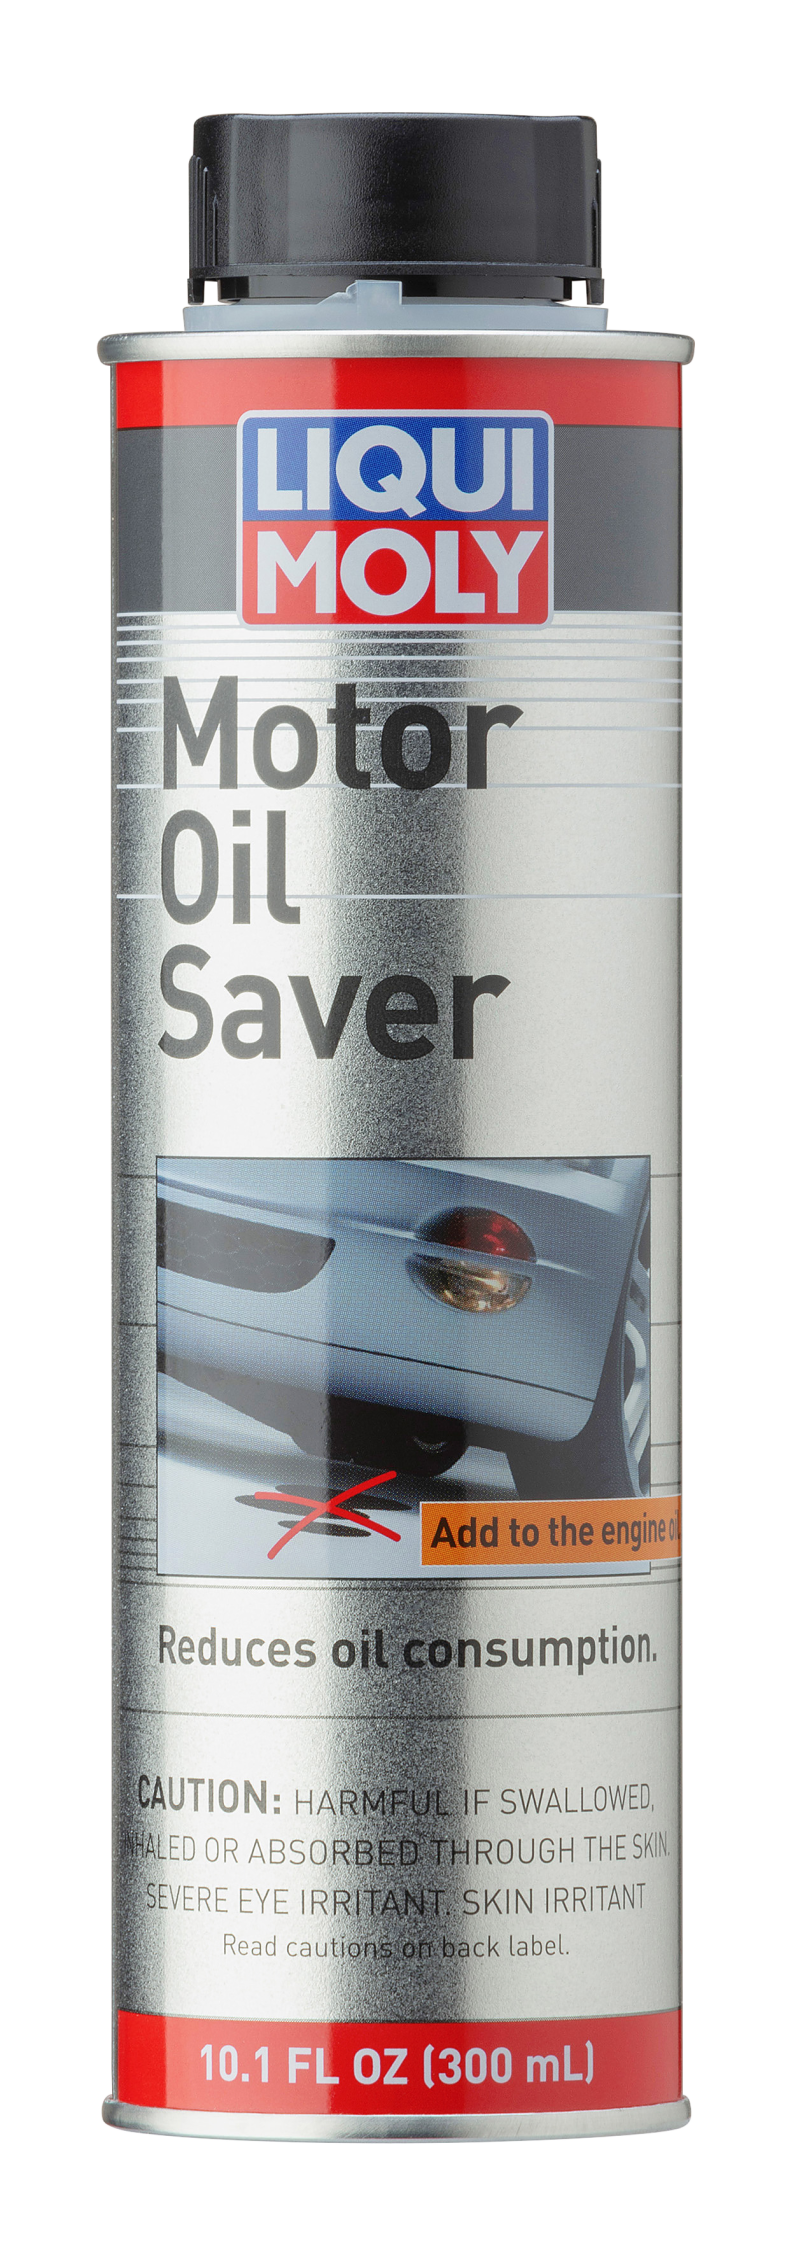 LIQUI MOLY 300mL Motor Oil Saver.